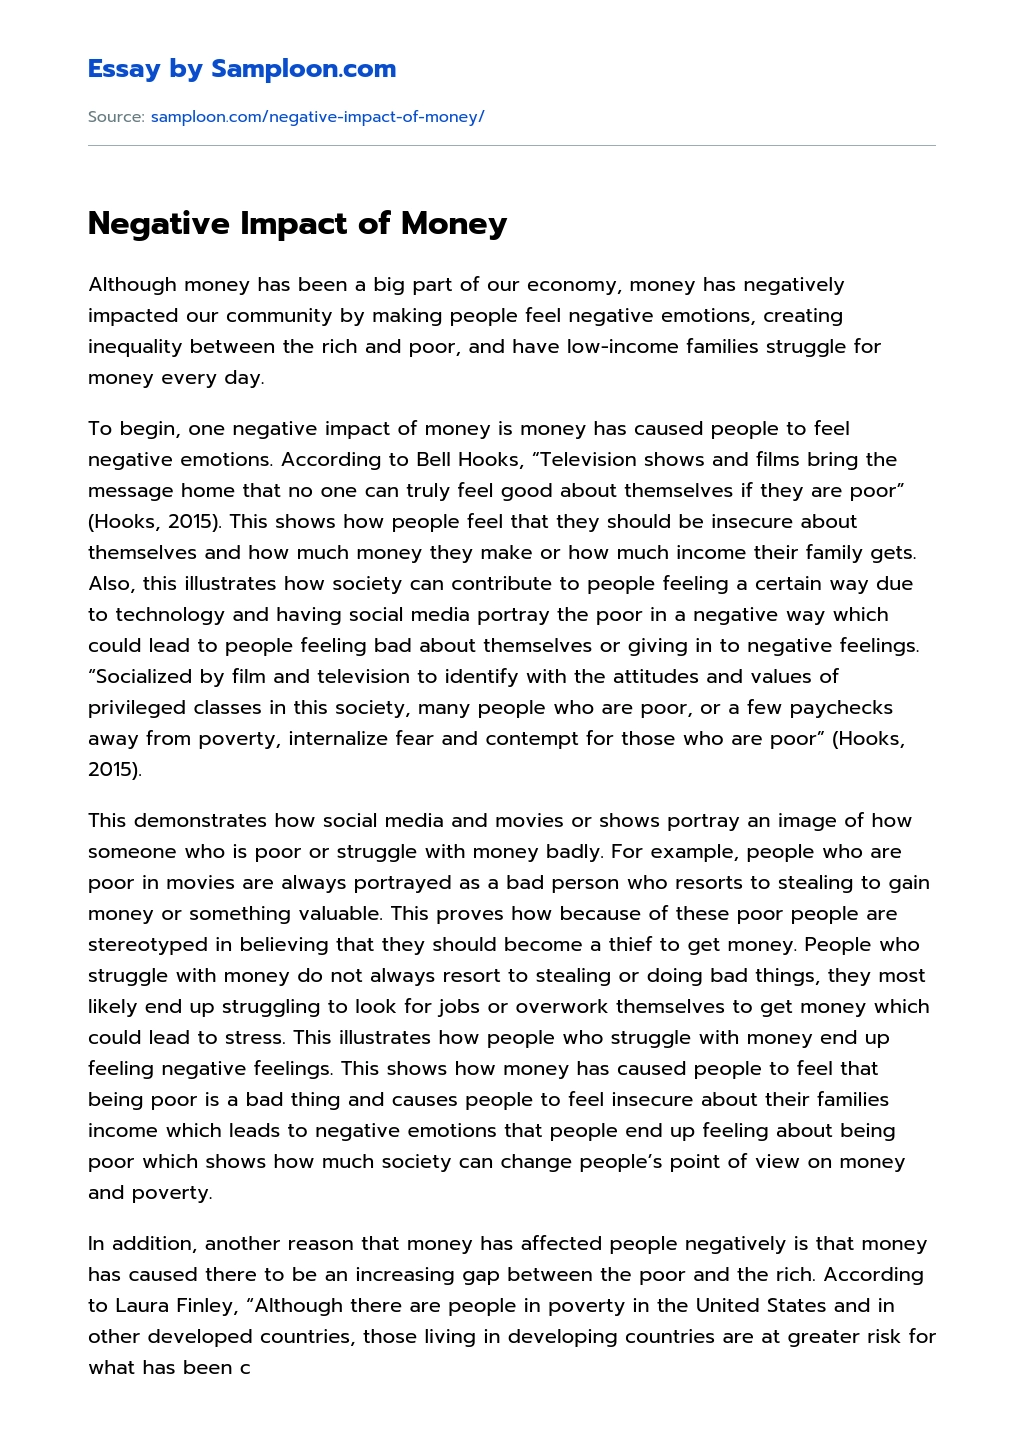 Negative Impact of Money essay